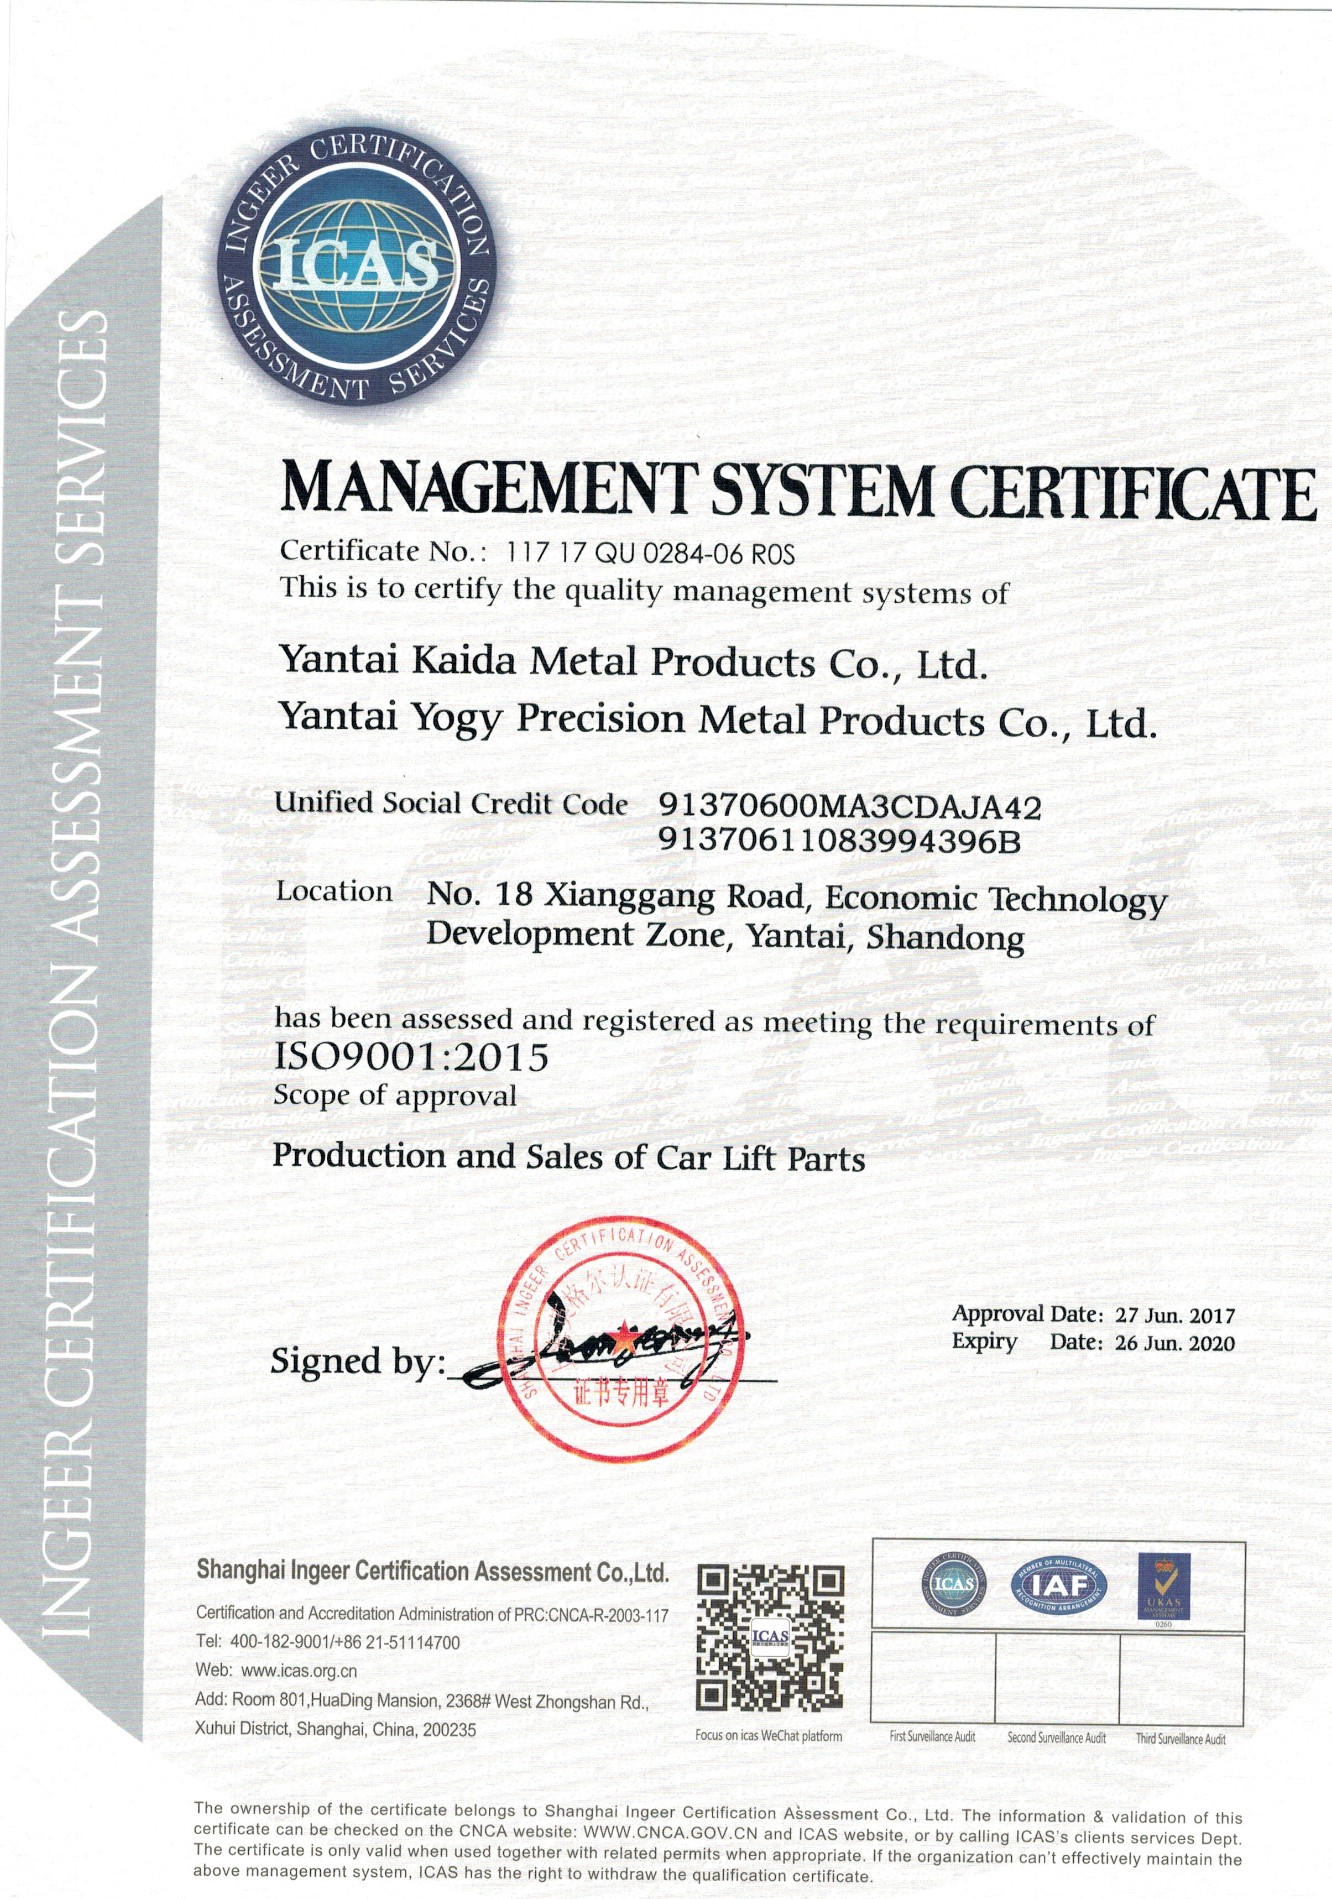 Sijil ISO9001: 2015